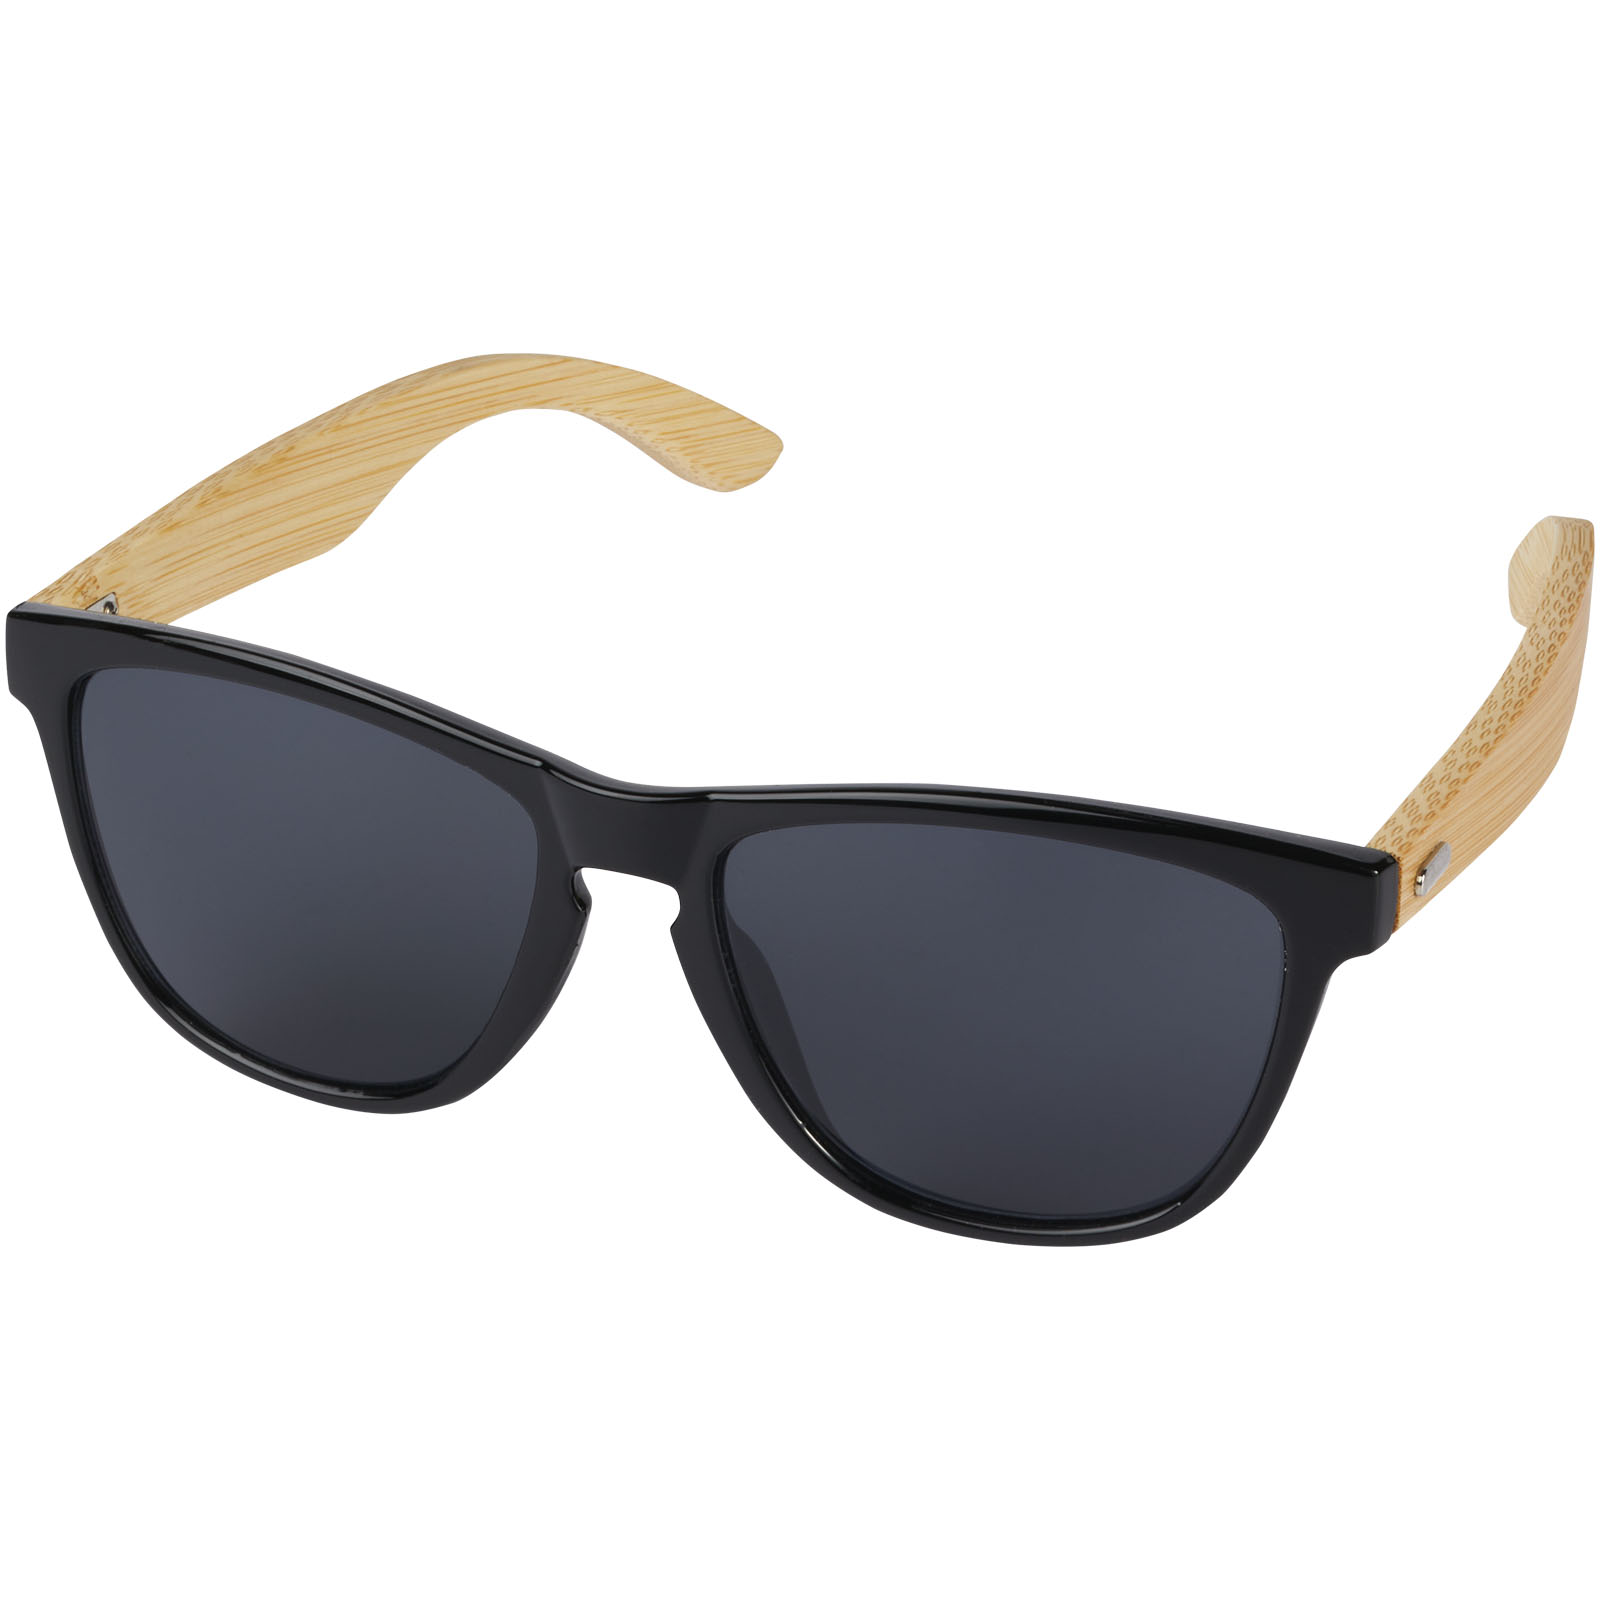 Sunglasses - Sun Ray ocean bound plastic and bamboo sunglasses